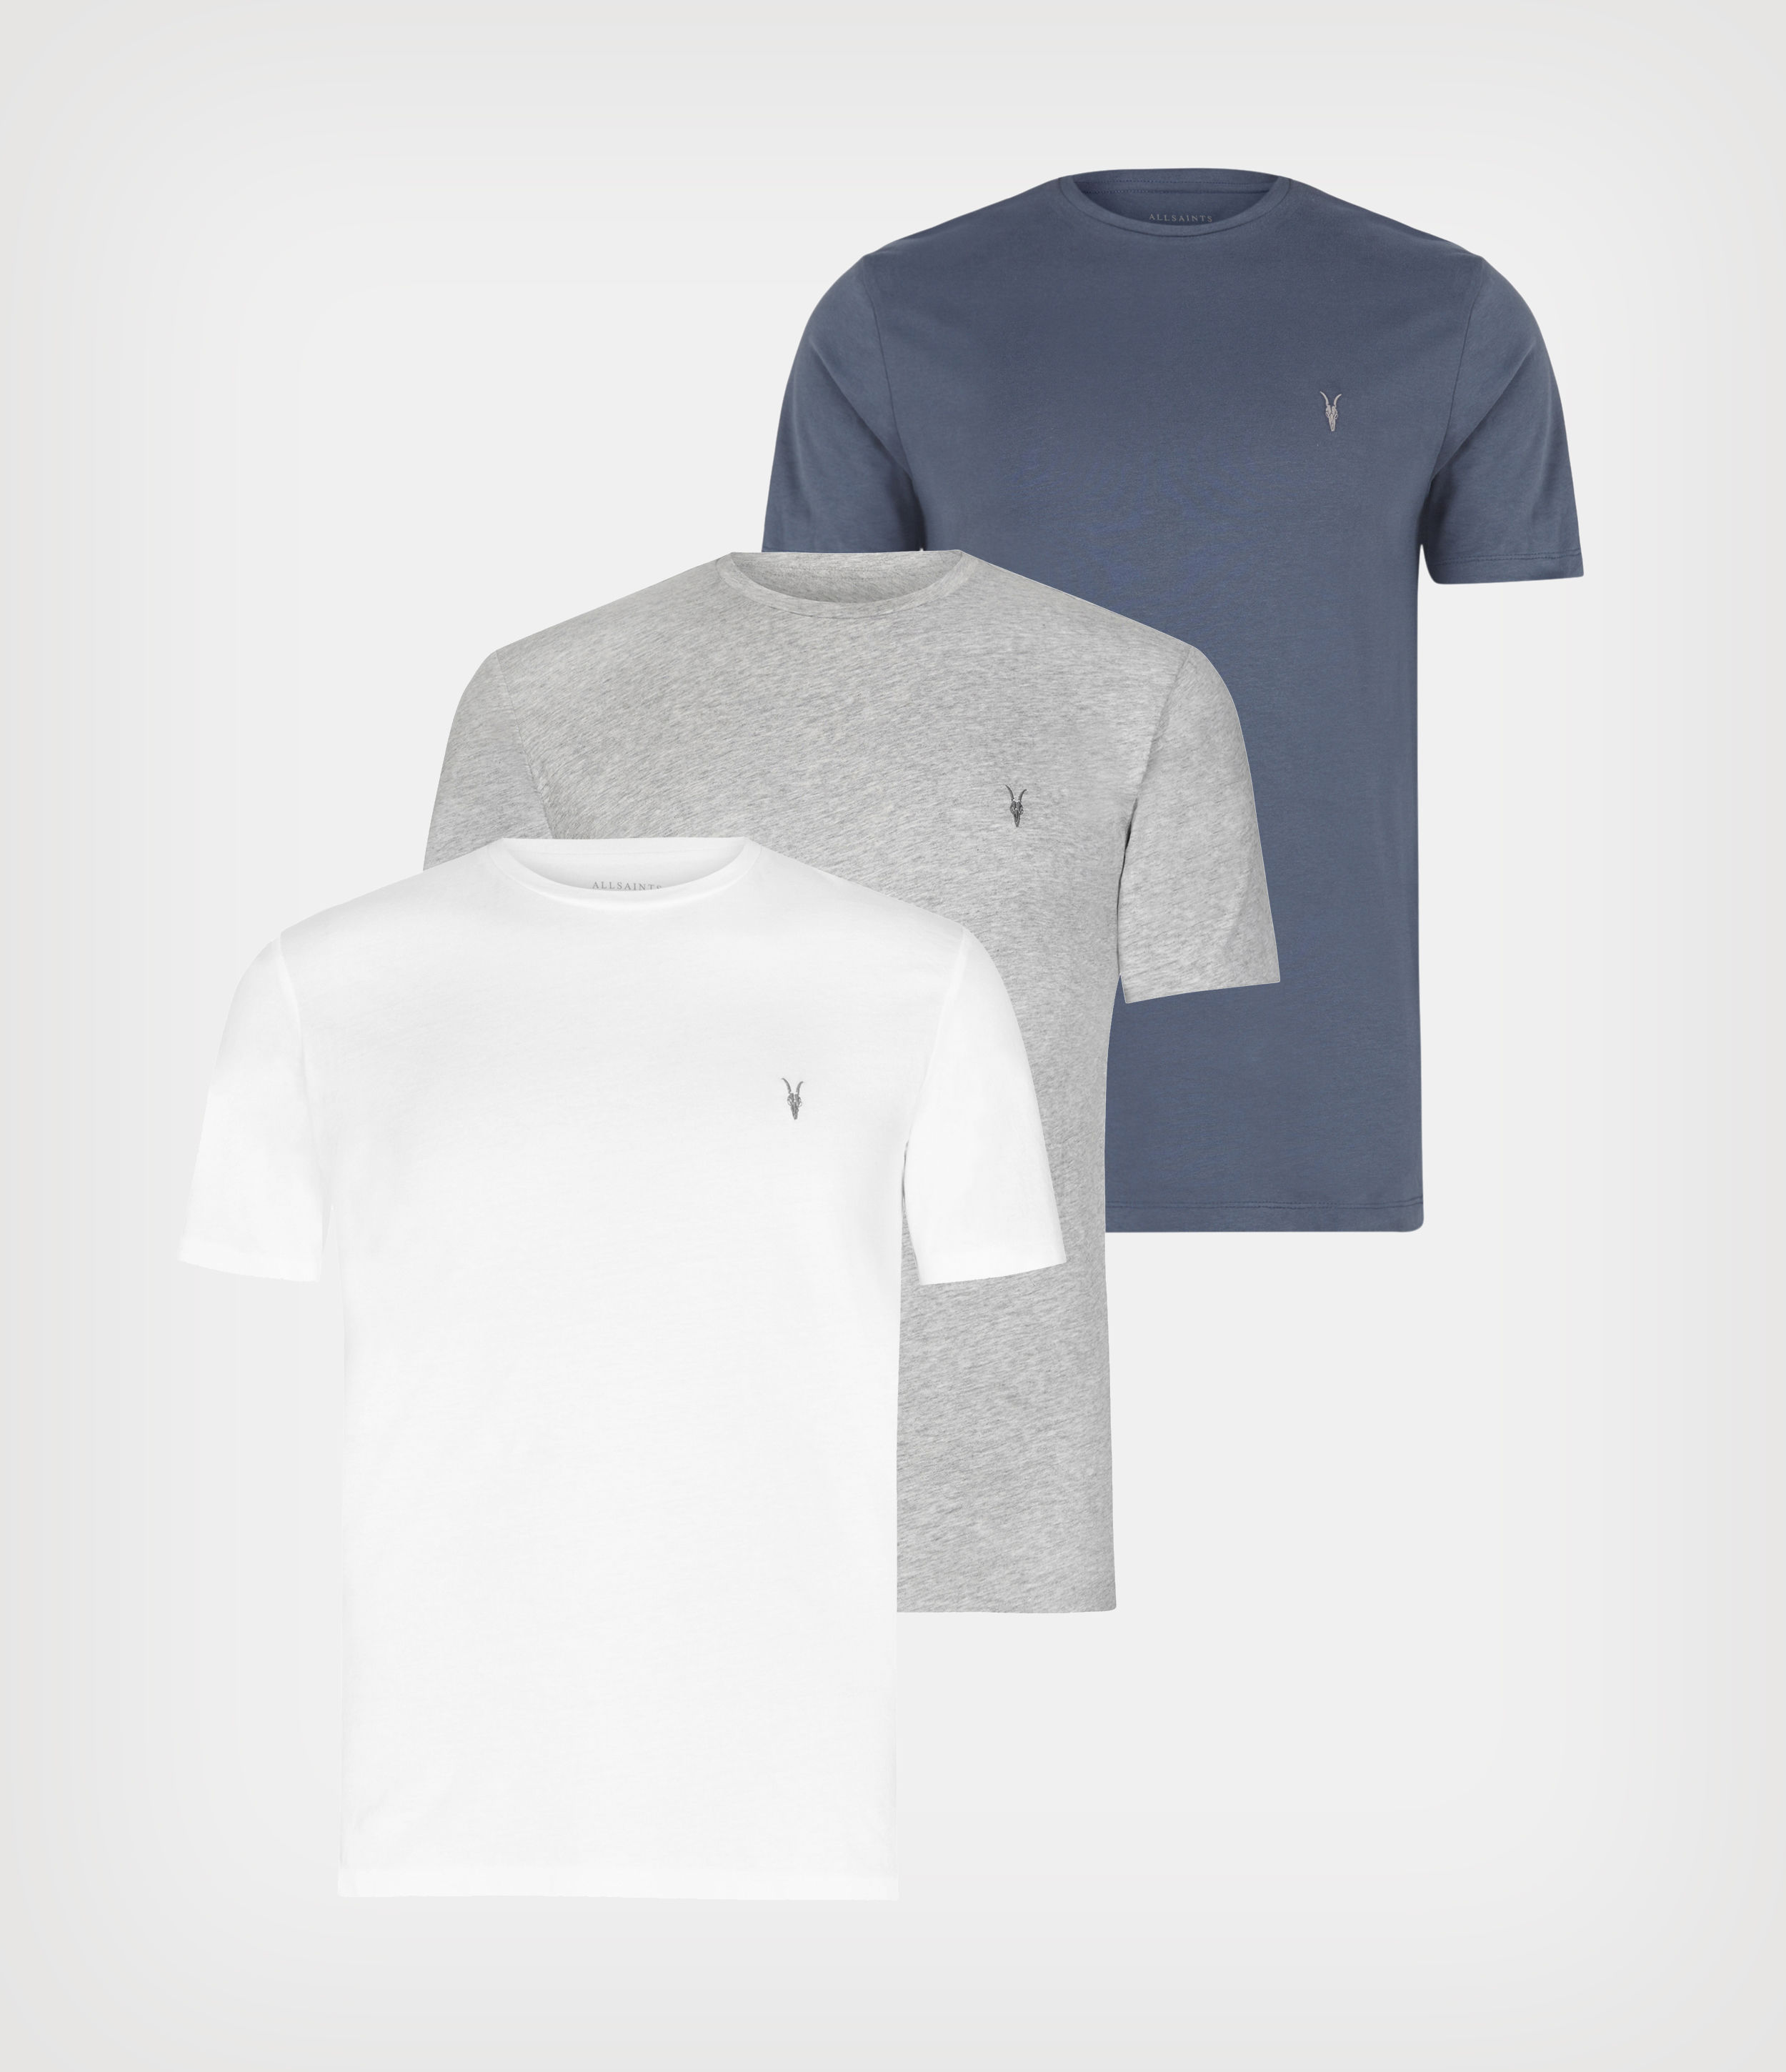 AllSaints Men's Brace Crew 3 Pack T-Shirts, Stormy/opt/grey ML, Size: XL